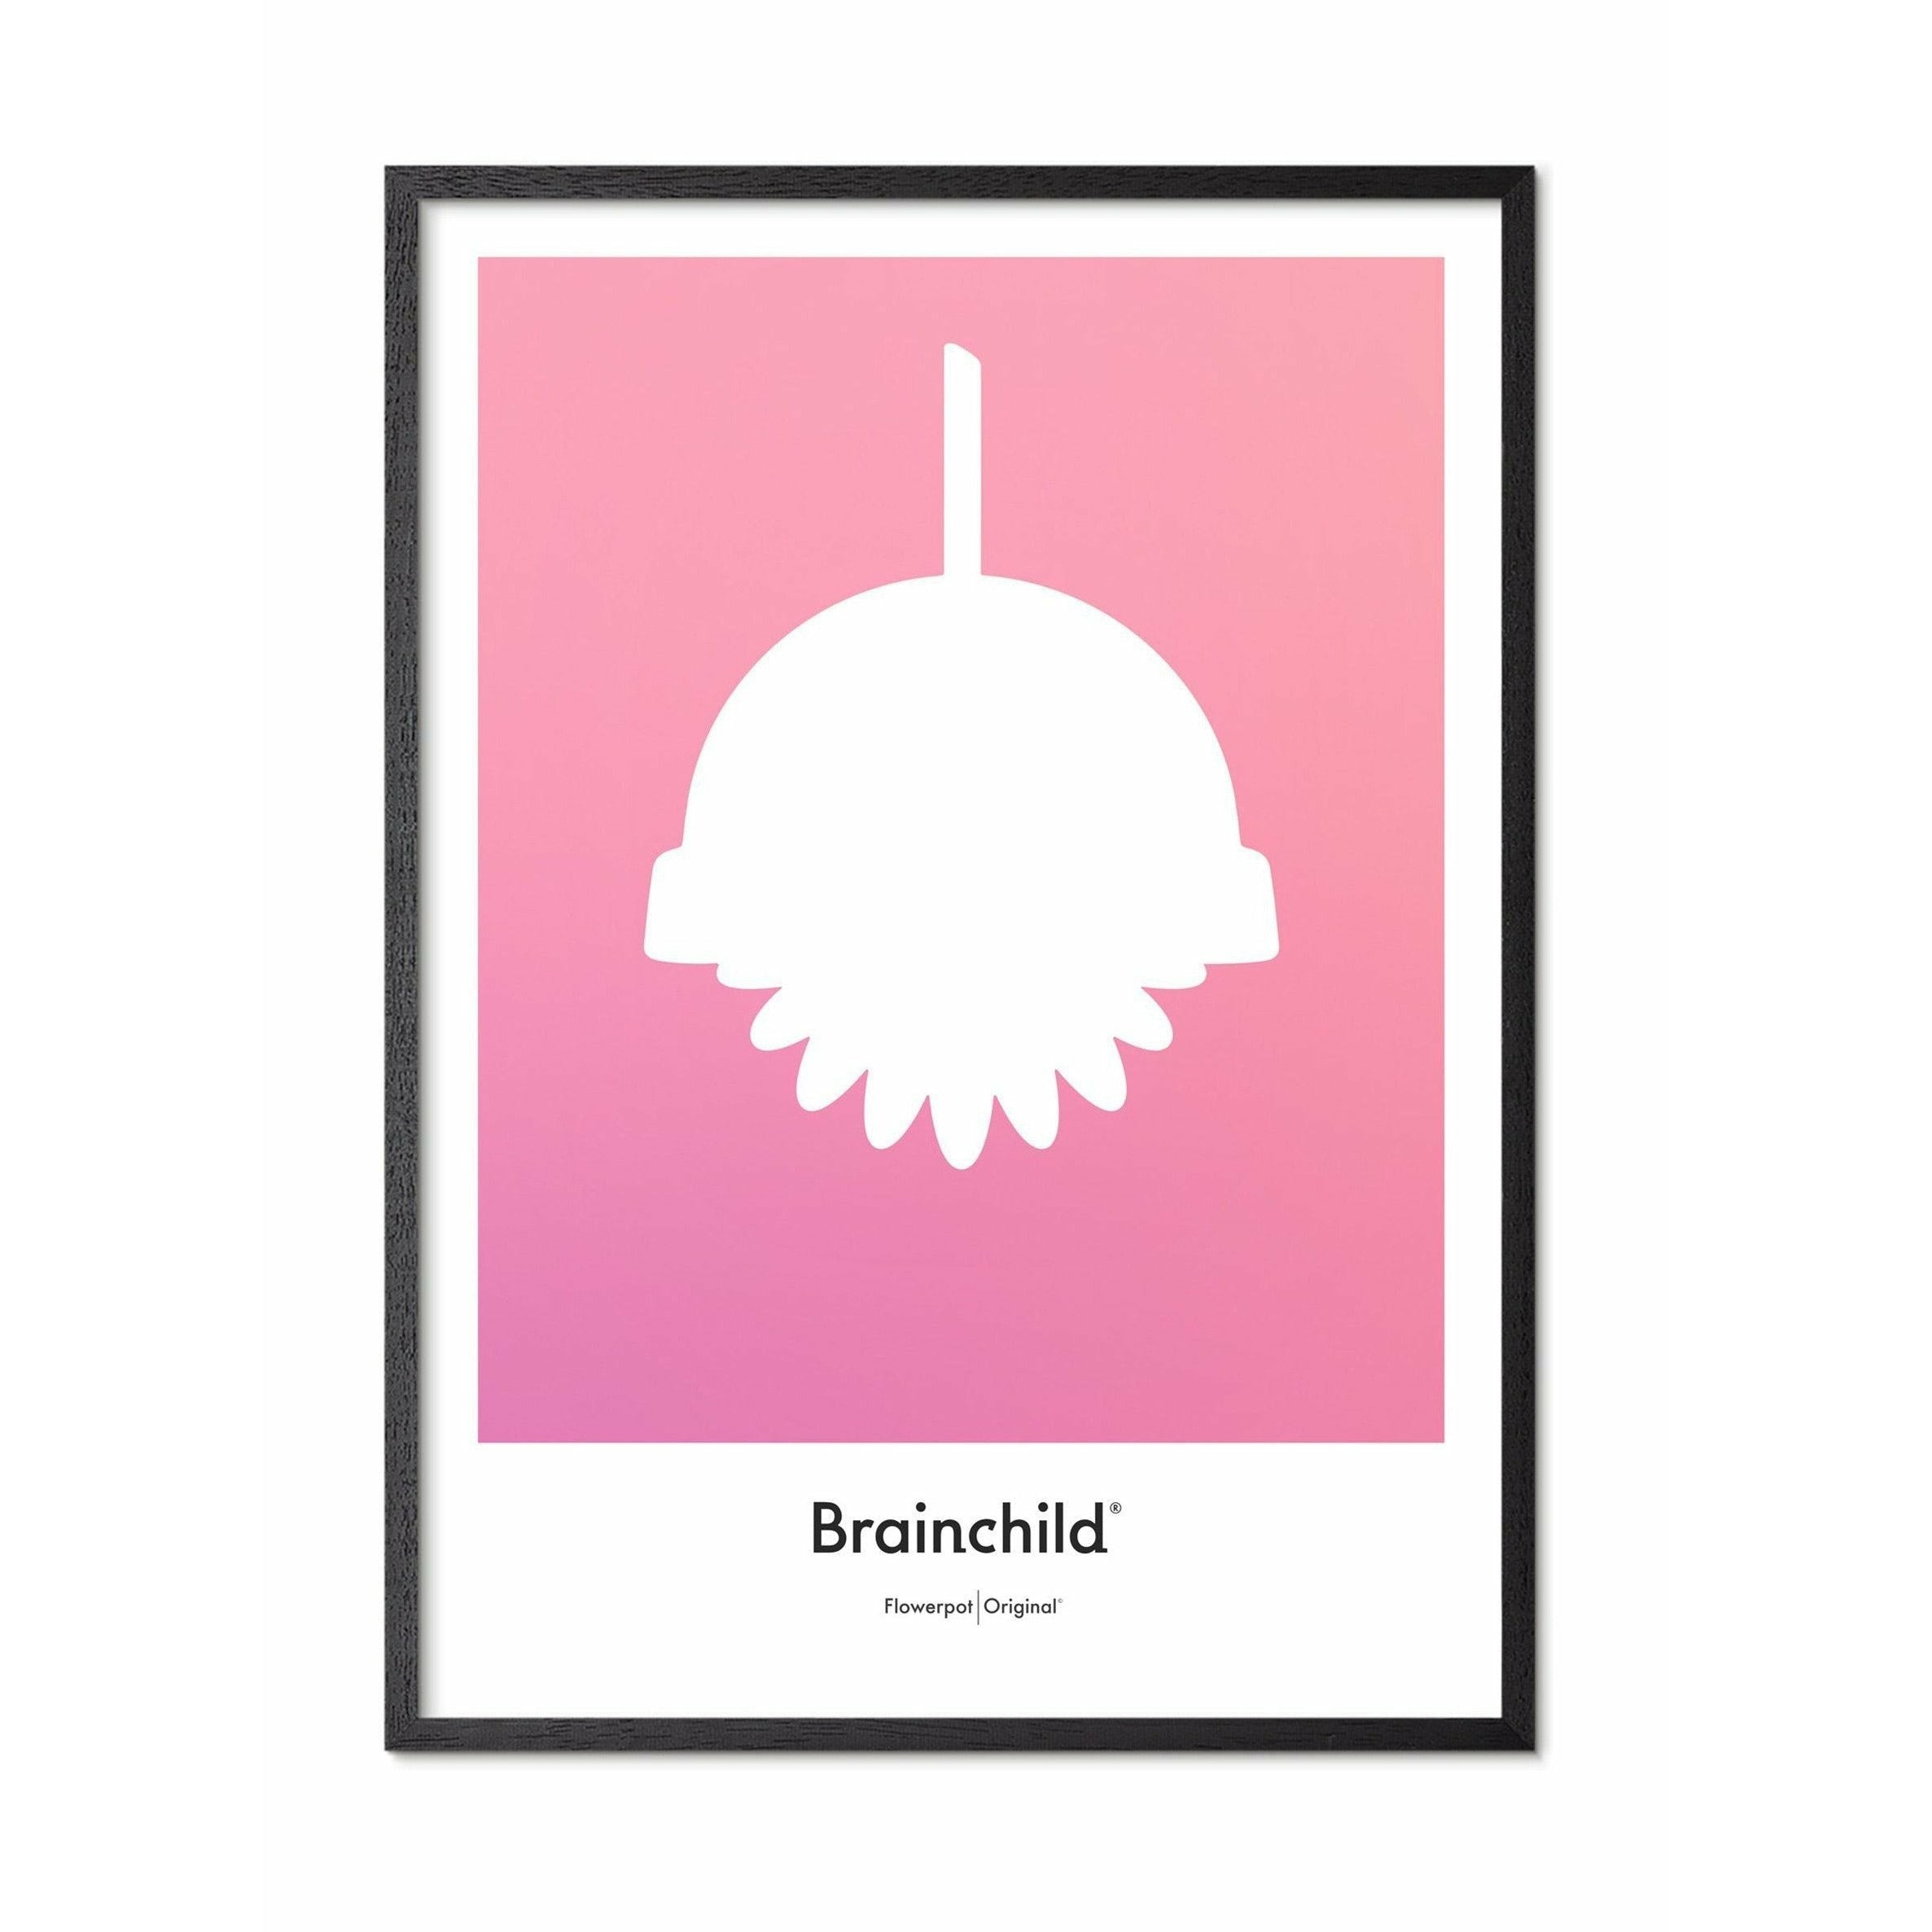 Brainchild Blumentopf Design Icon Poster, Rahmen In Schwarz Lackiert Holz 50x70 Cm, Rosa